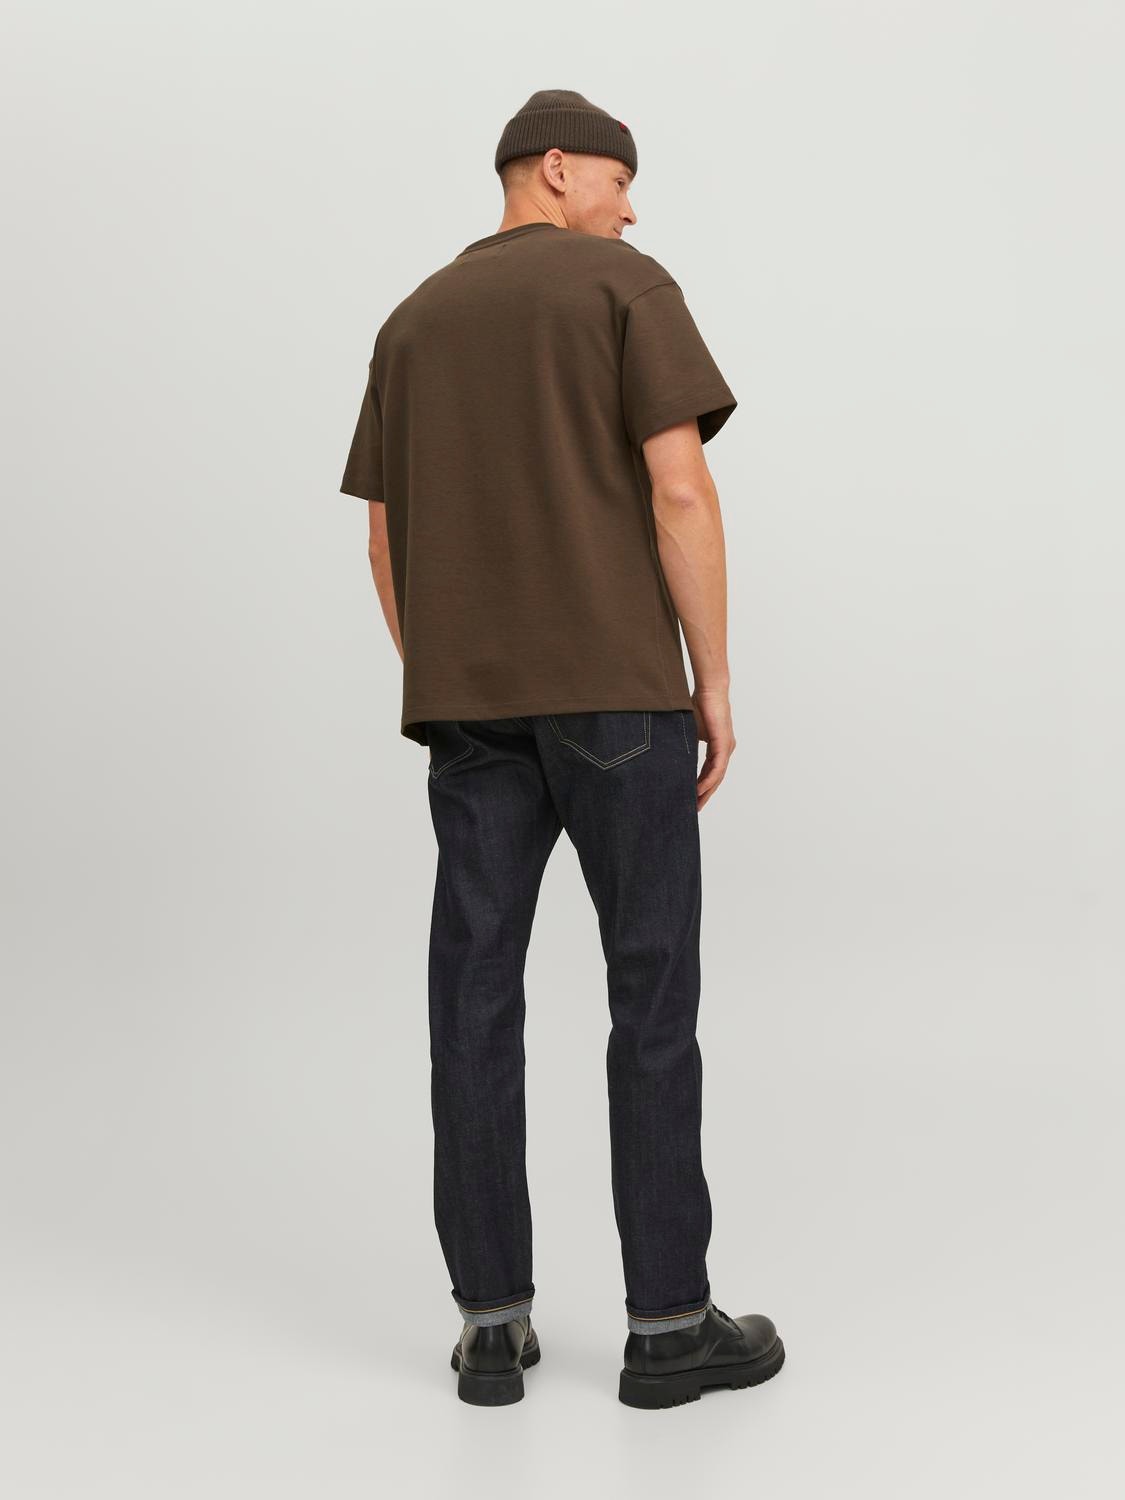 Jack & Jones RDD Printed Crew neck T-shirt -Chocolate Brown - 12243500